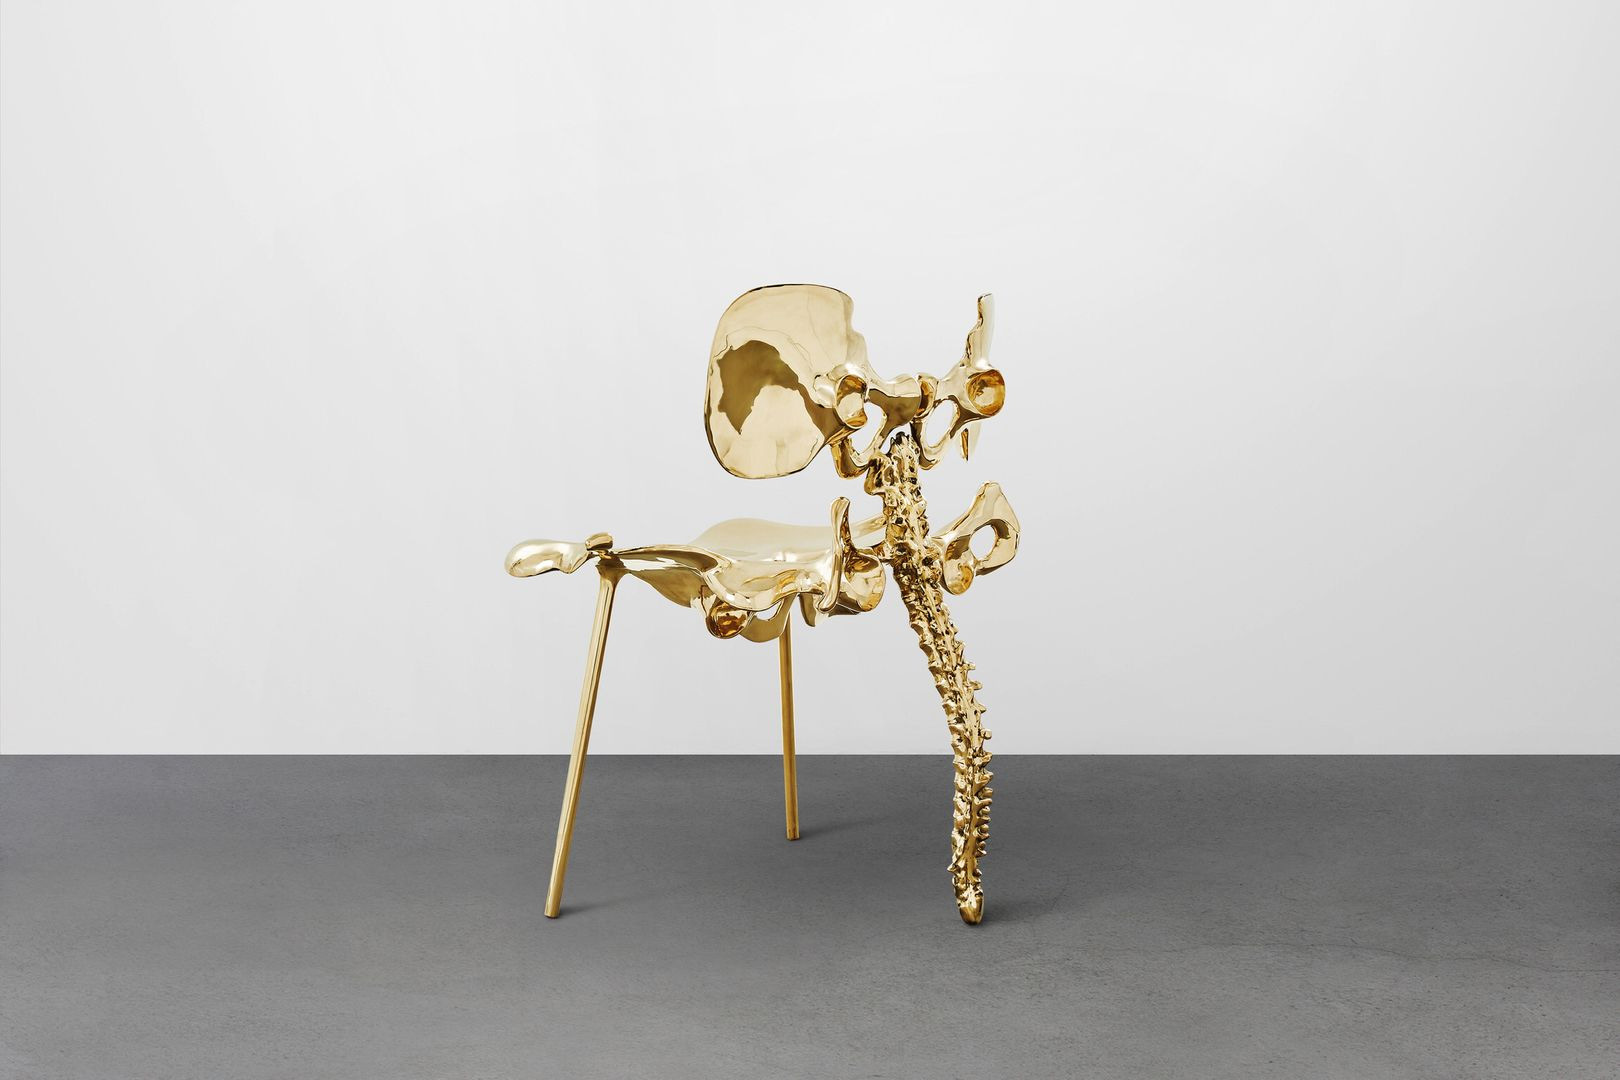 Impressive Furniture Inspired from Human Bones